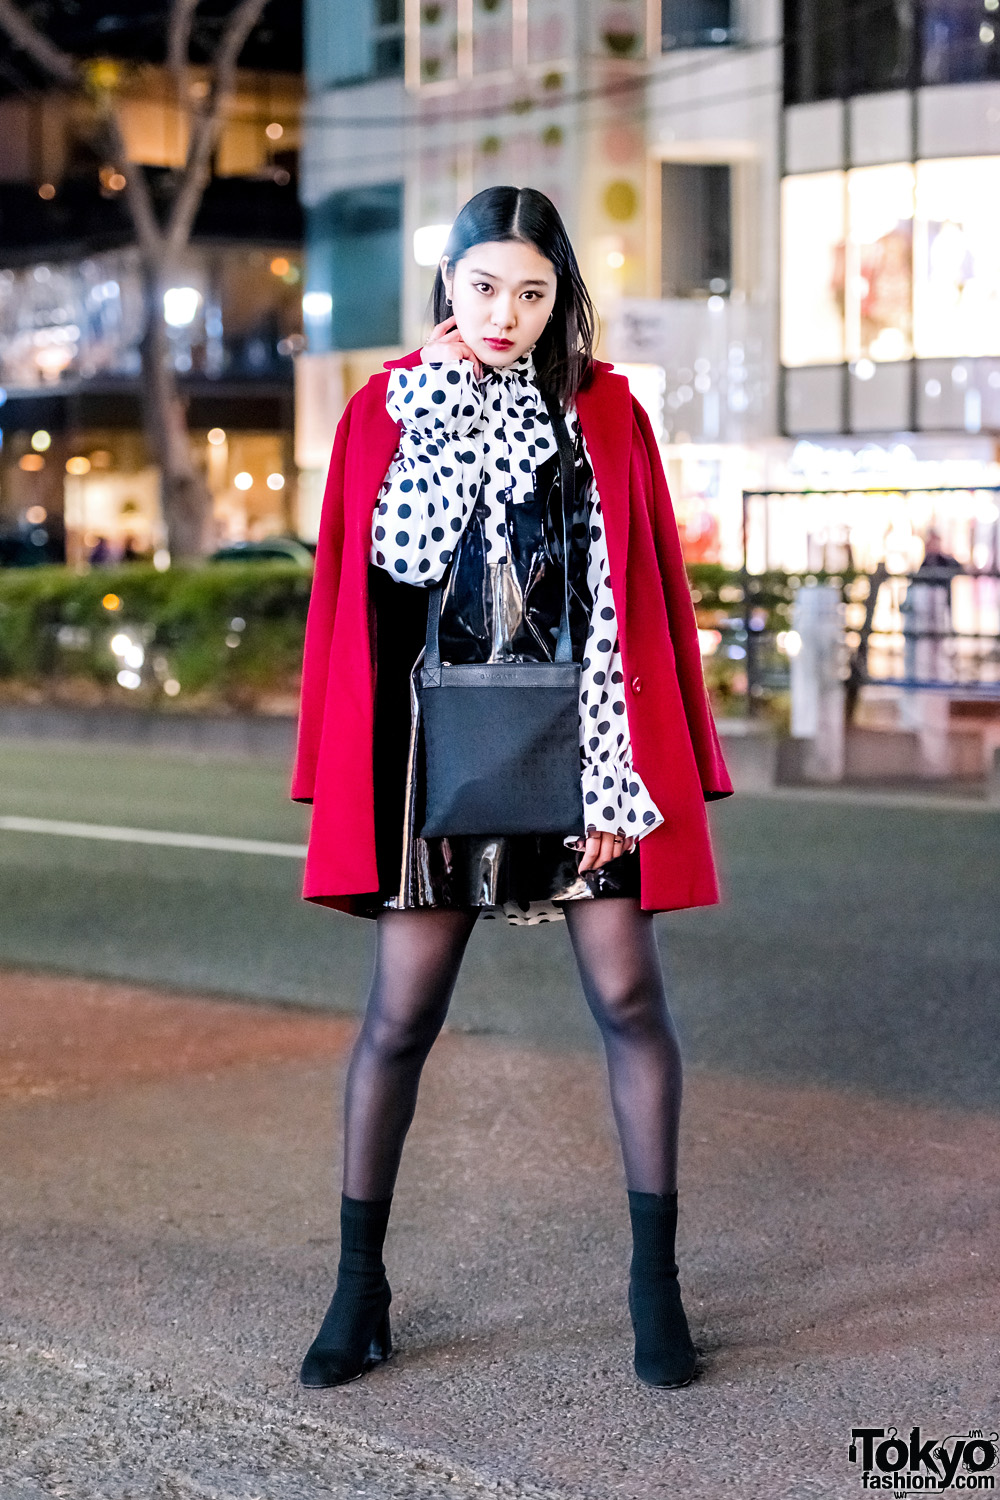 Harajuku Model & Actress in Red Coat, Polka Dots, Patent Leather Dress, Suede Heels & Bvlgari Bag